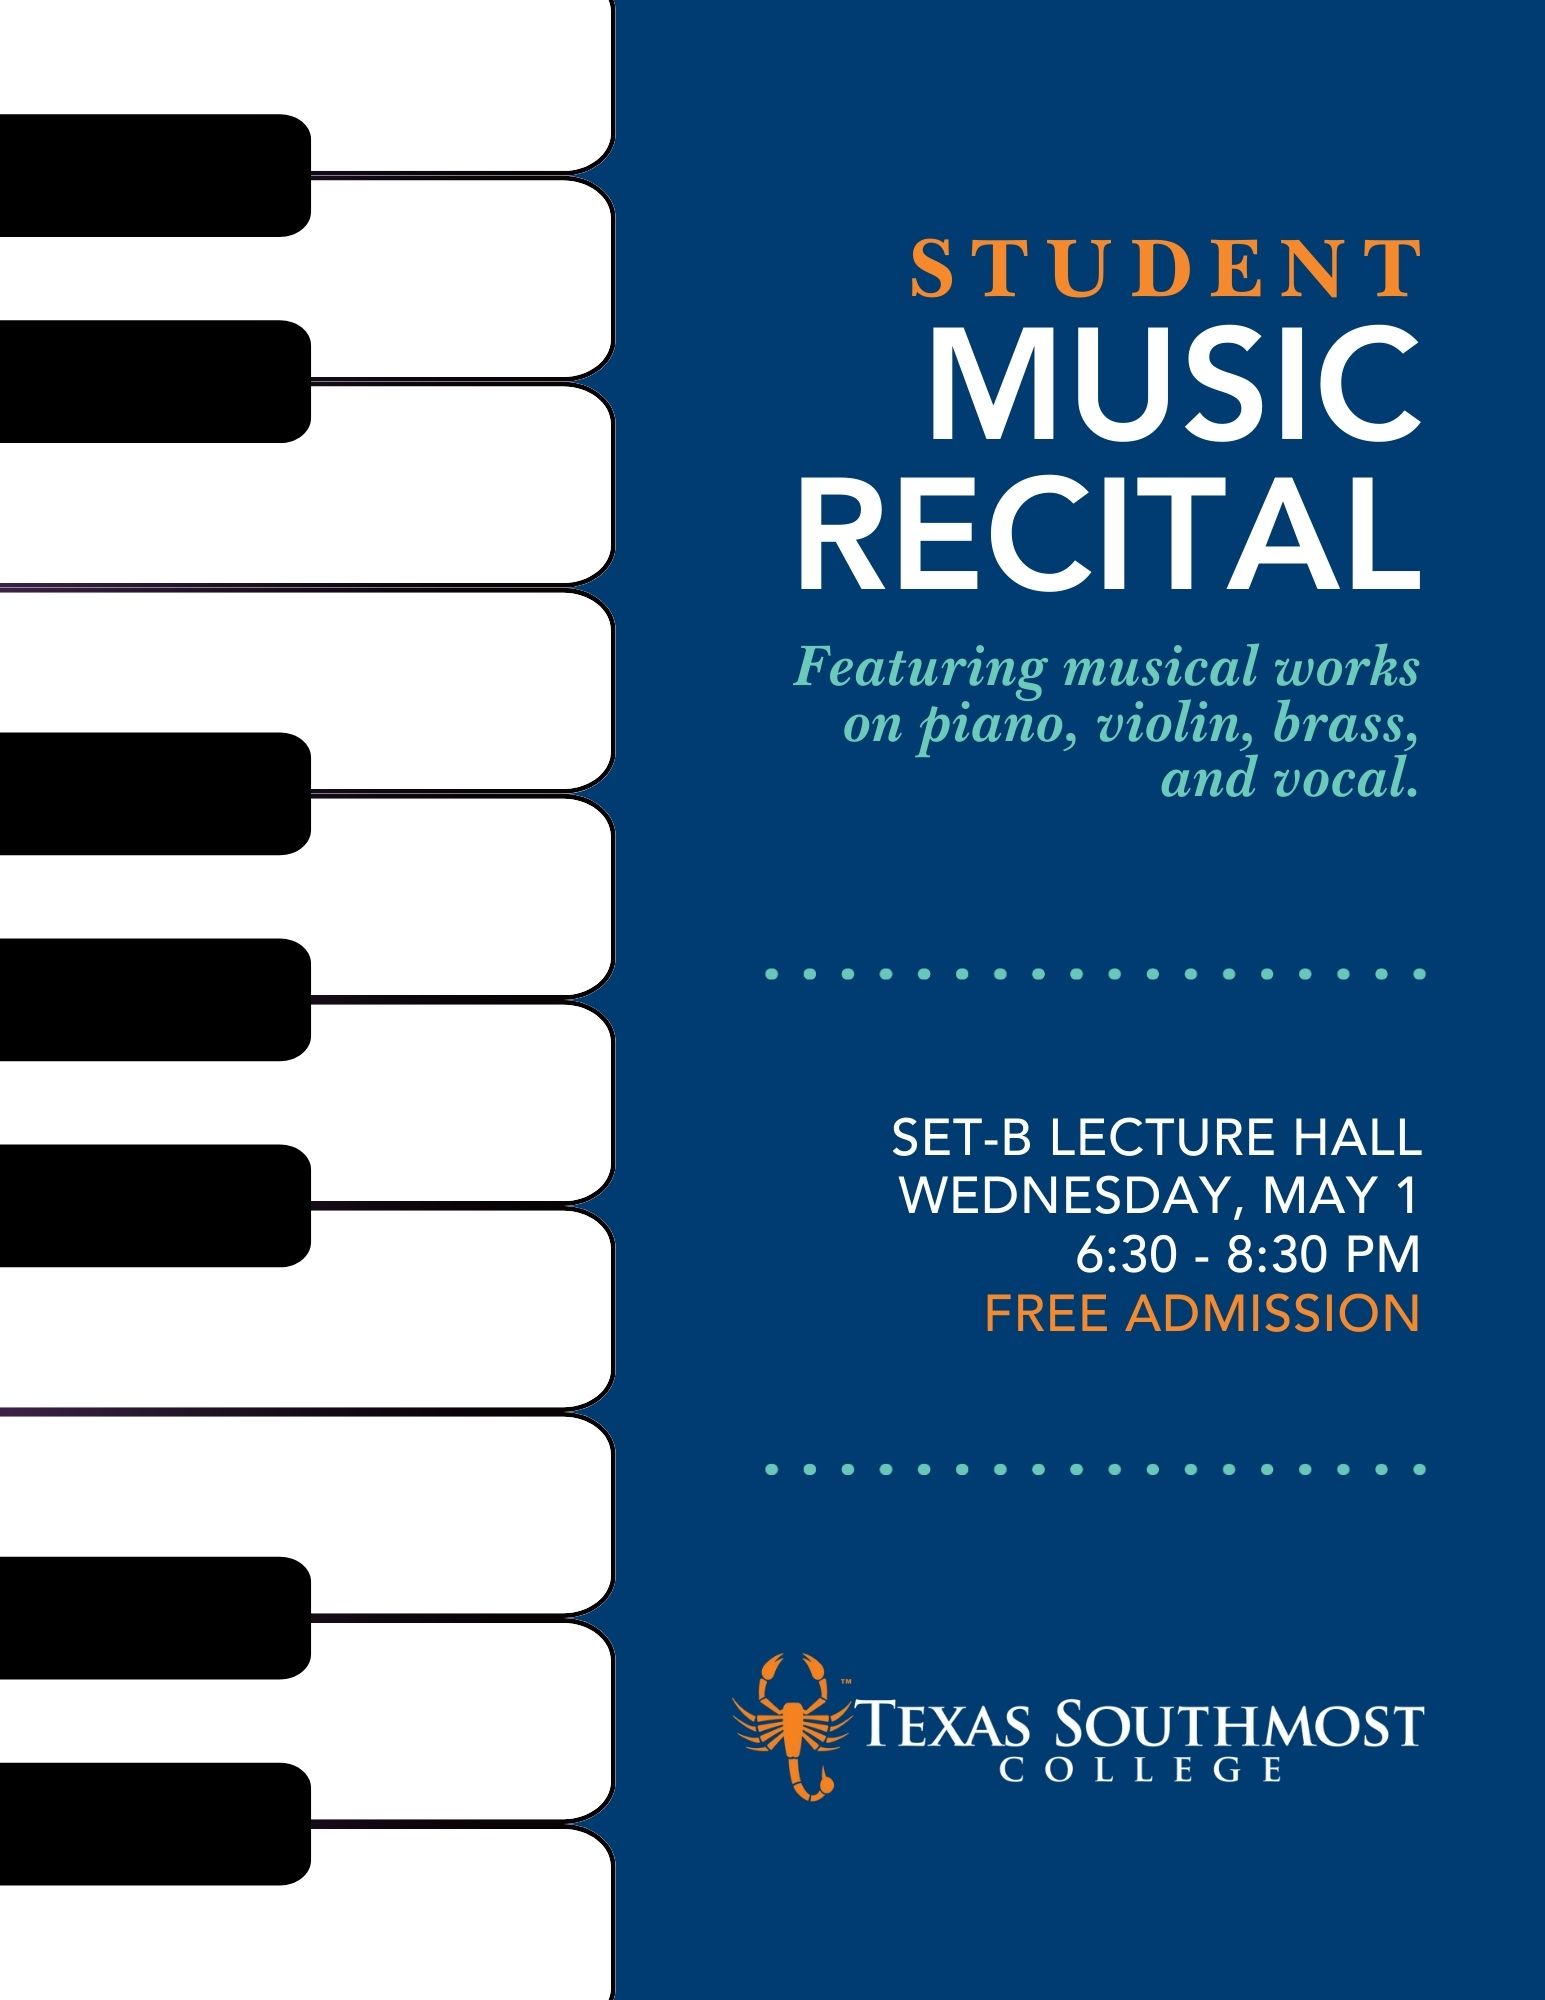 Student Music Recital Flyer